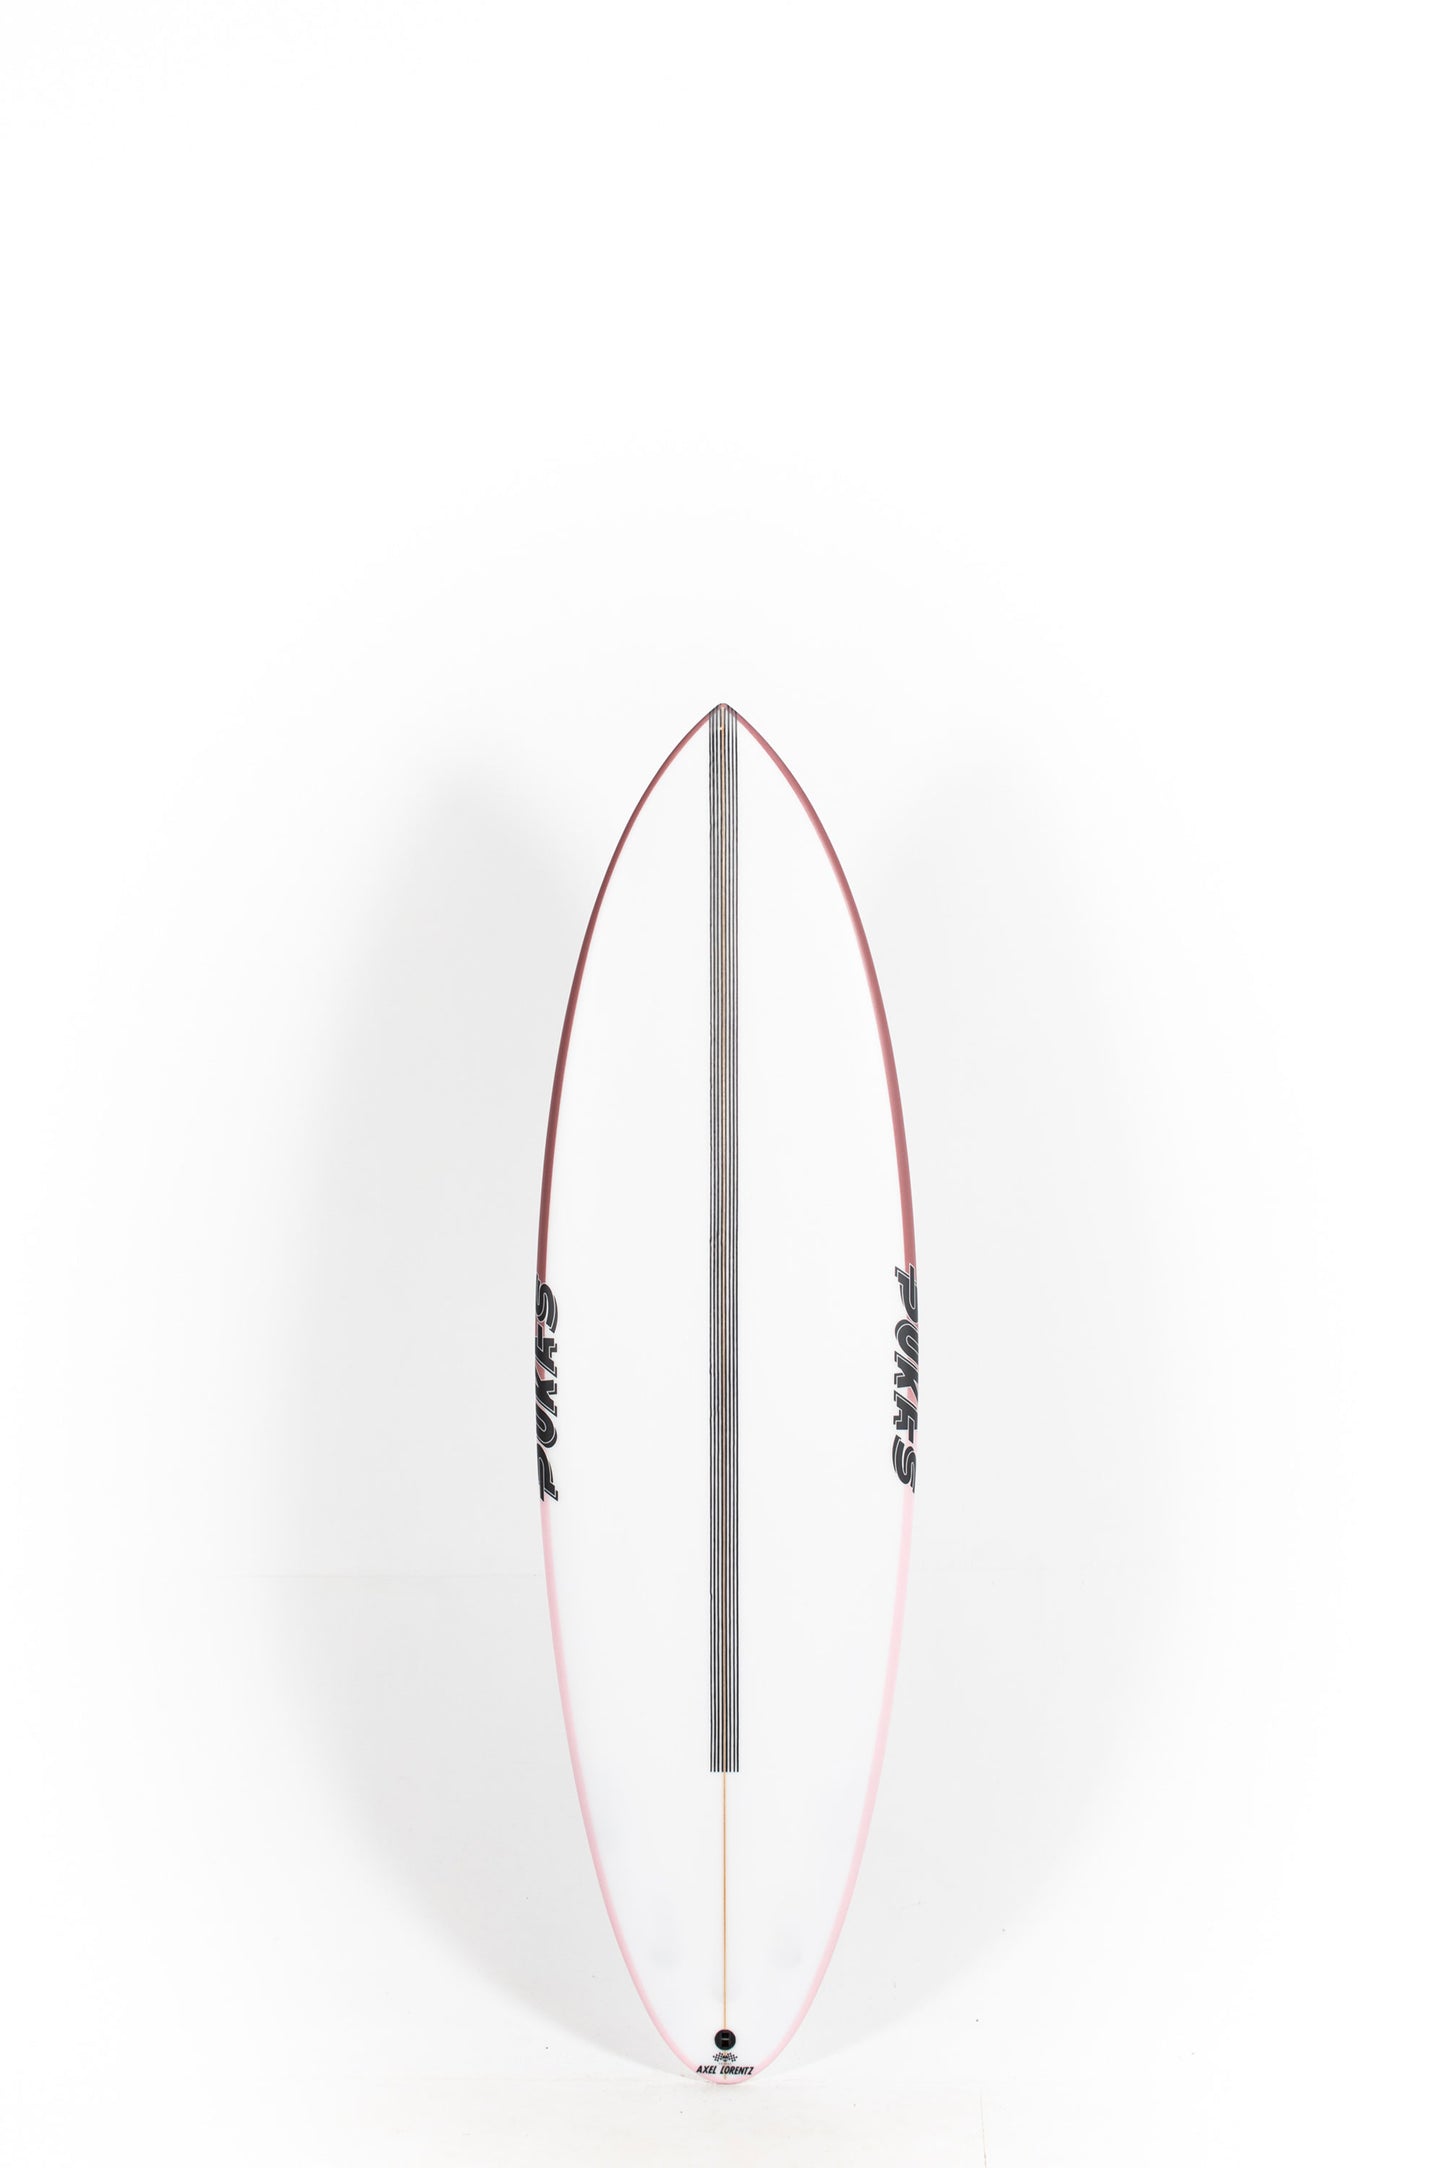 Pukas Surf shop - Pukas Surfboard - 69ER EVOLUTION by Axel Lorentz- 5’10” x 19,75 x 2.38 - 29,10L - AX08894